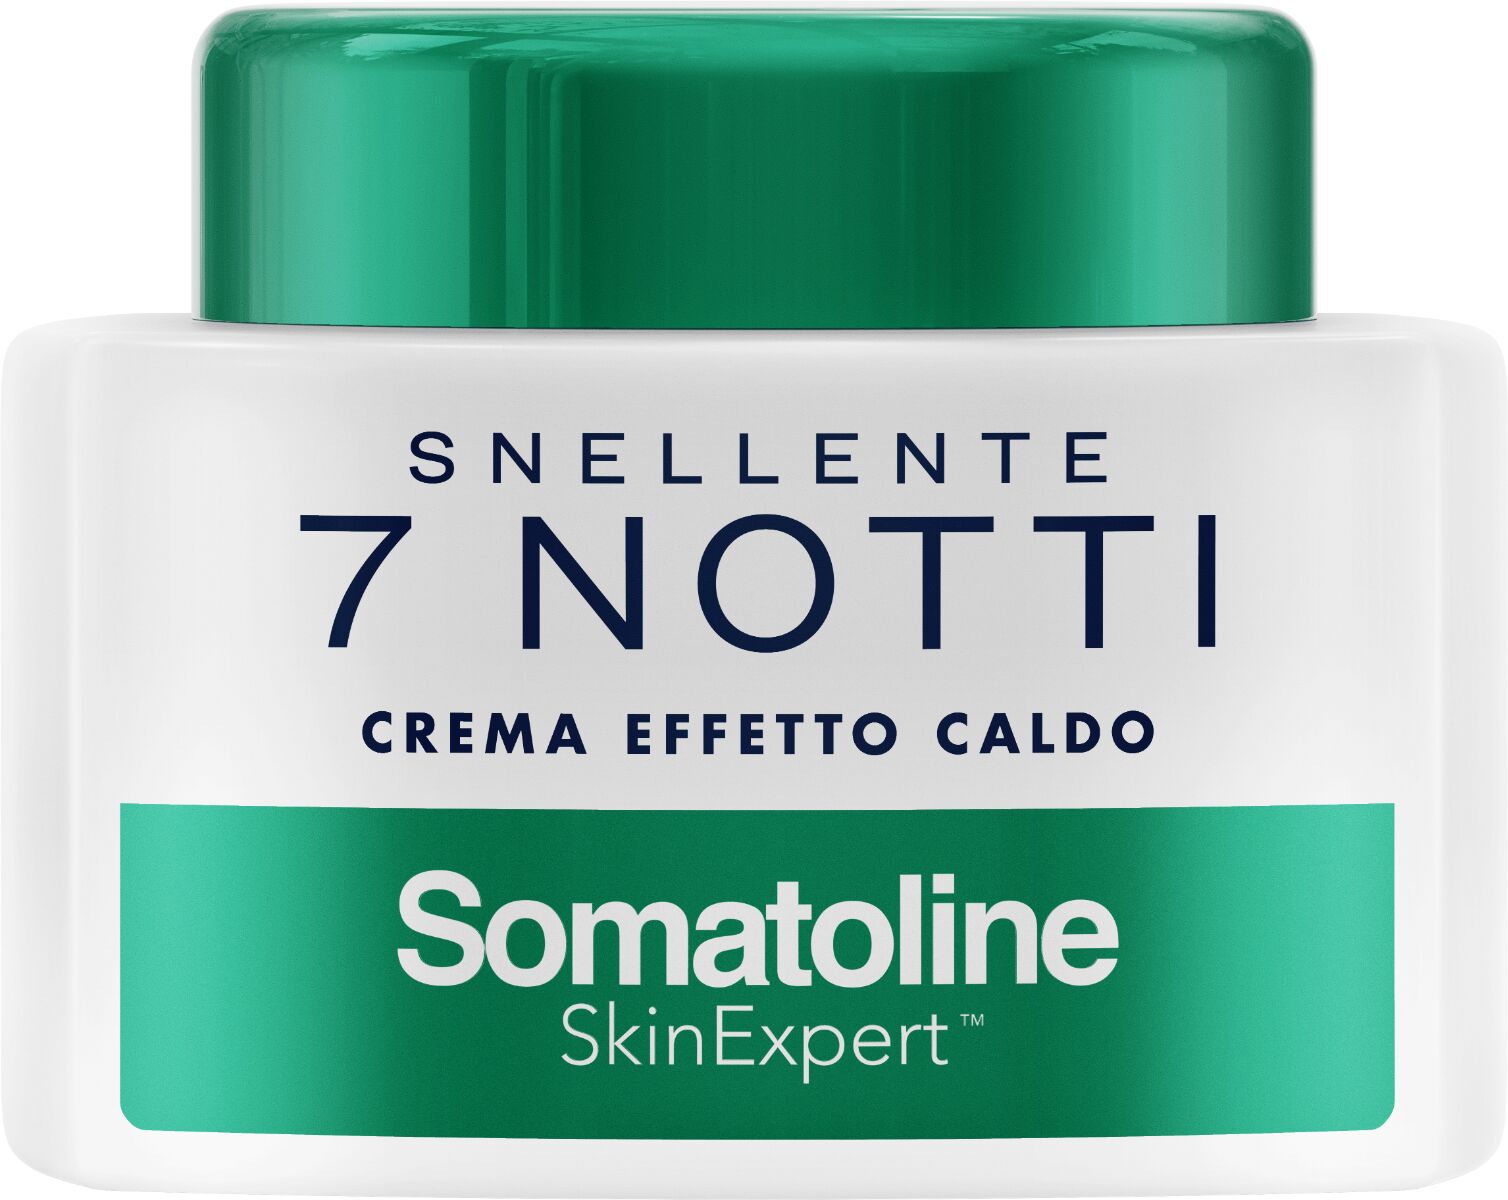 Somatoline SkinExpert Somatoline Skin Expert 7 Notti Crema Snellente - Effetto Caldo 250 ml